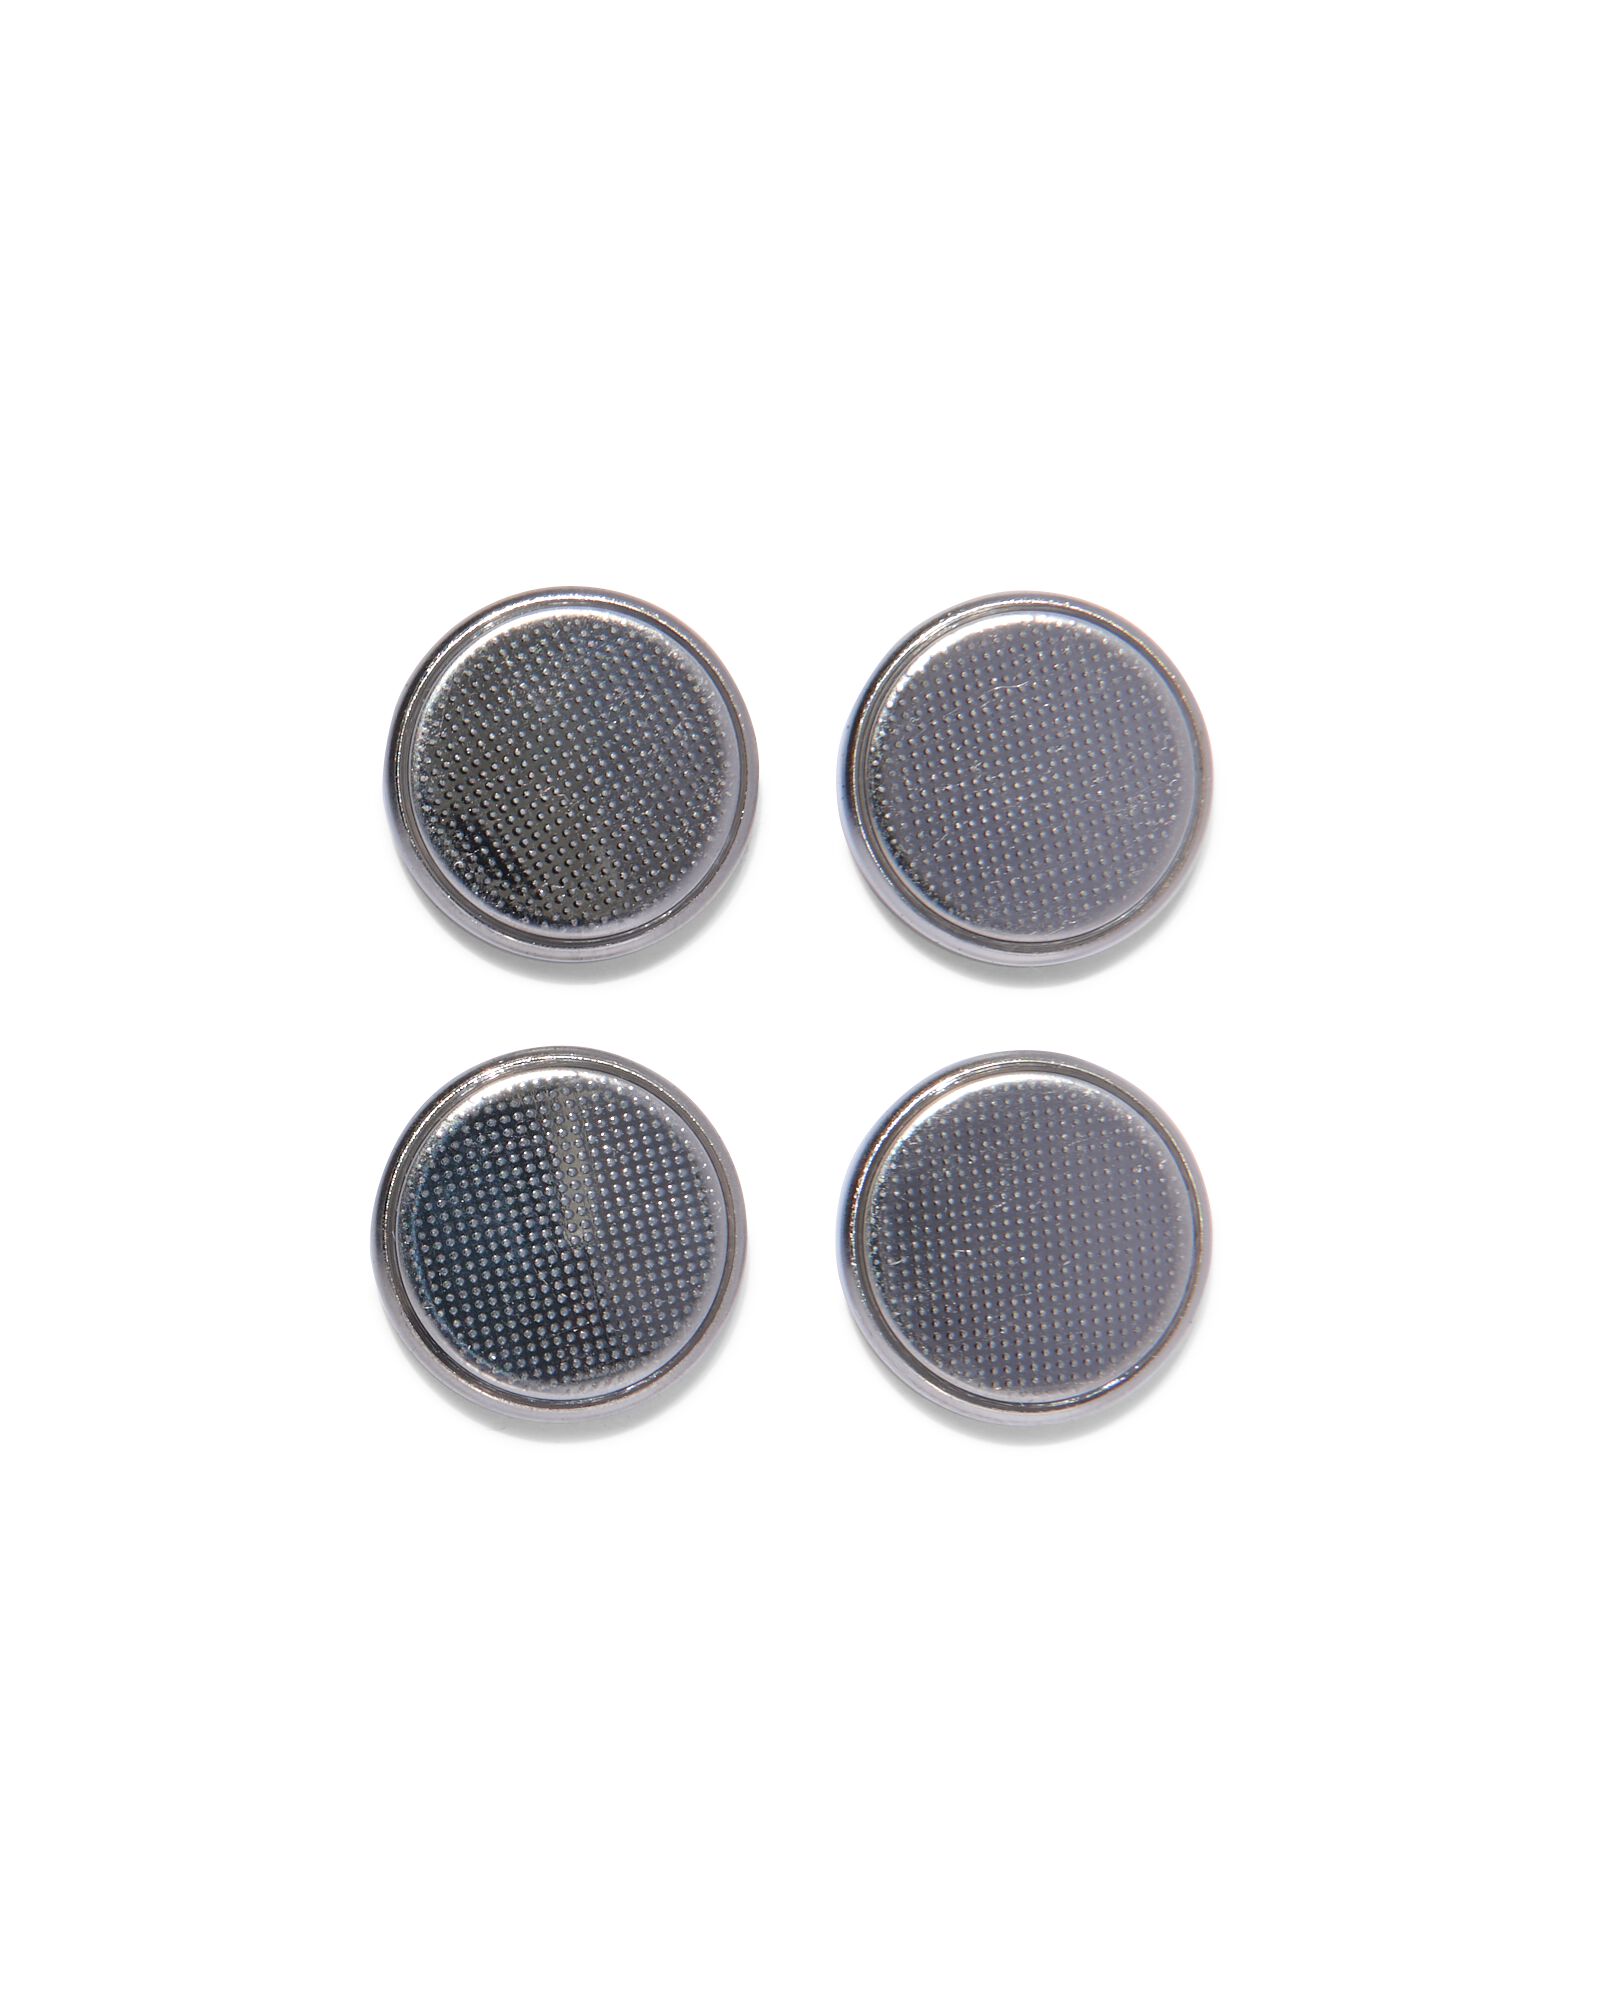 GP pile bouton, Lithium, CR2032, Safety seal, 4-p